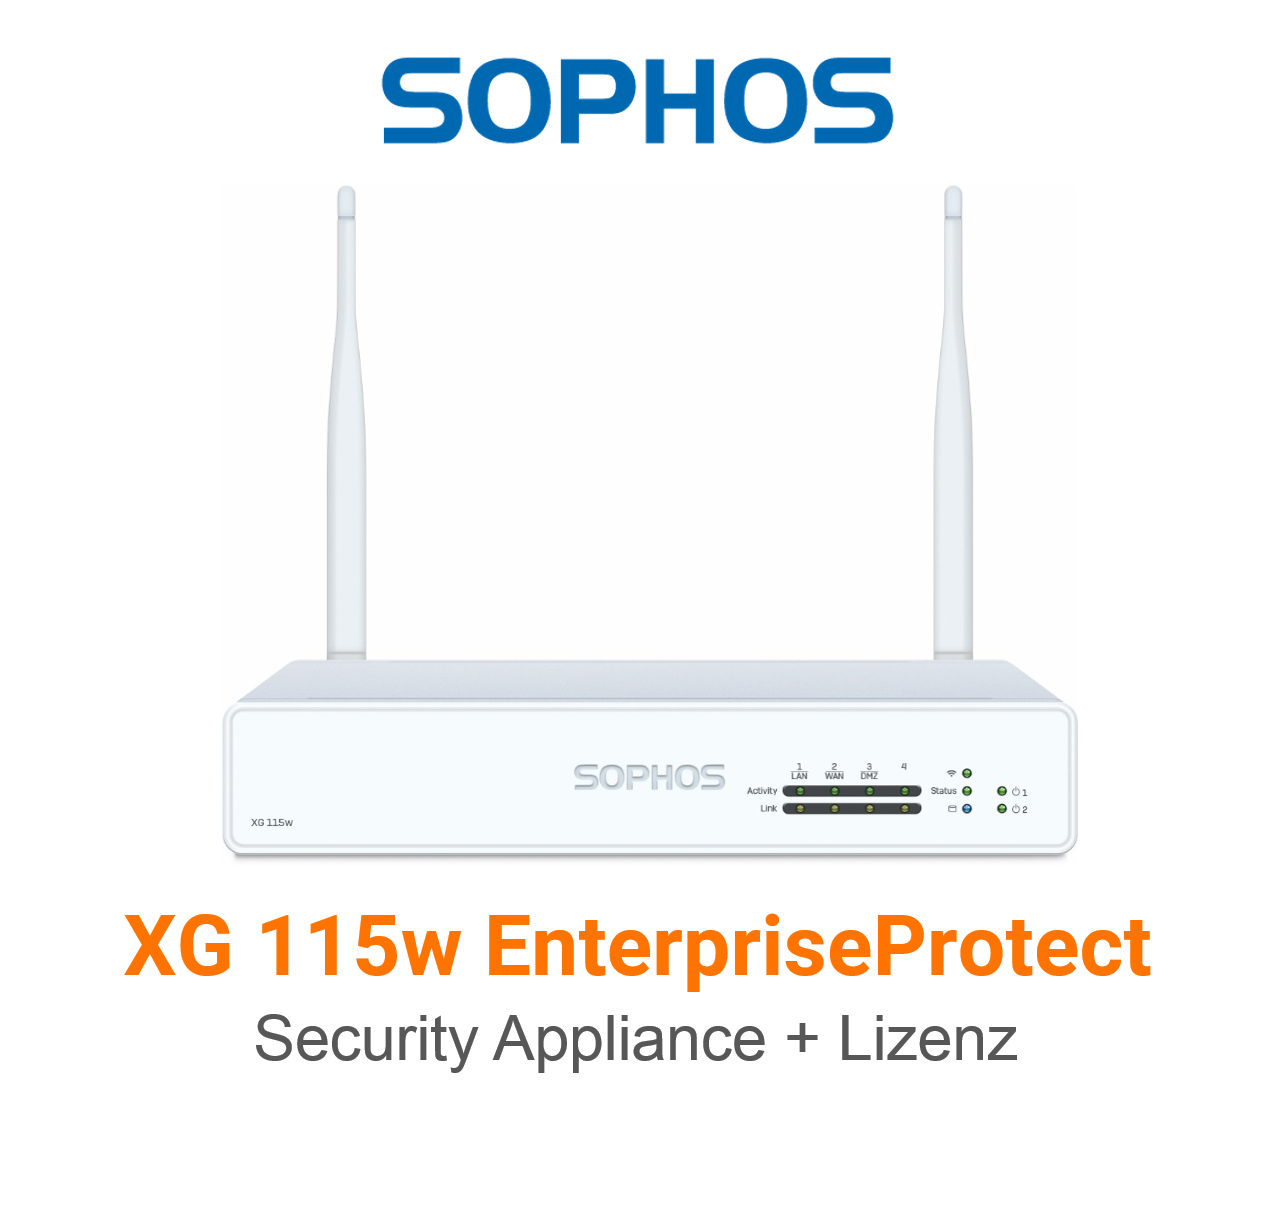 Sophos XG 115w EnterpriseProtect Bundle (Hardware + Lizenz) (End of Sale/Life)